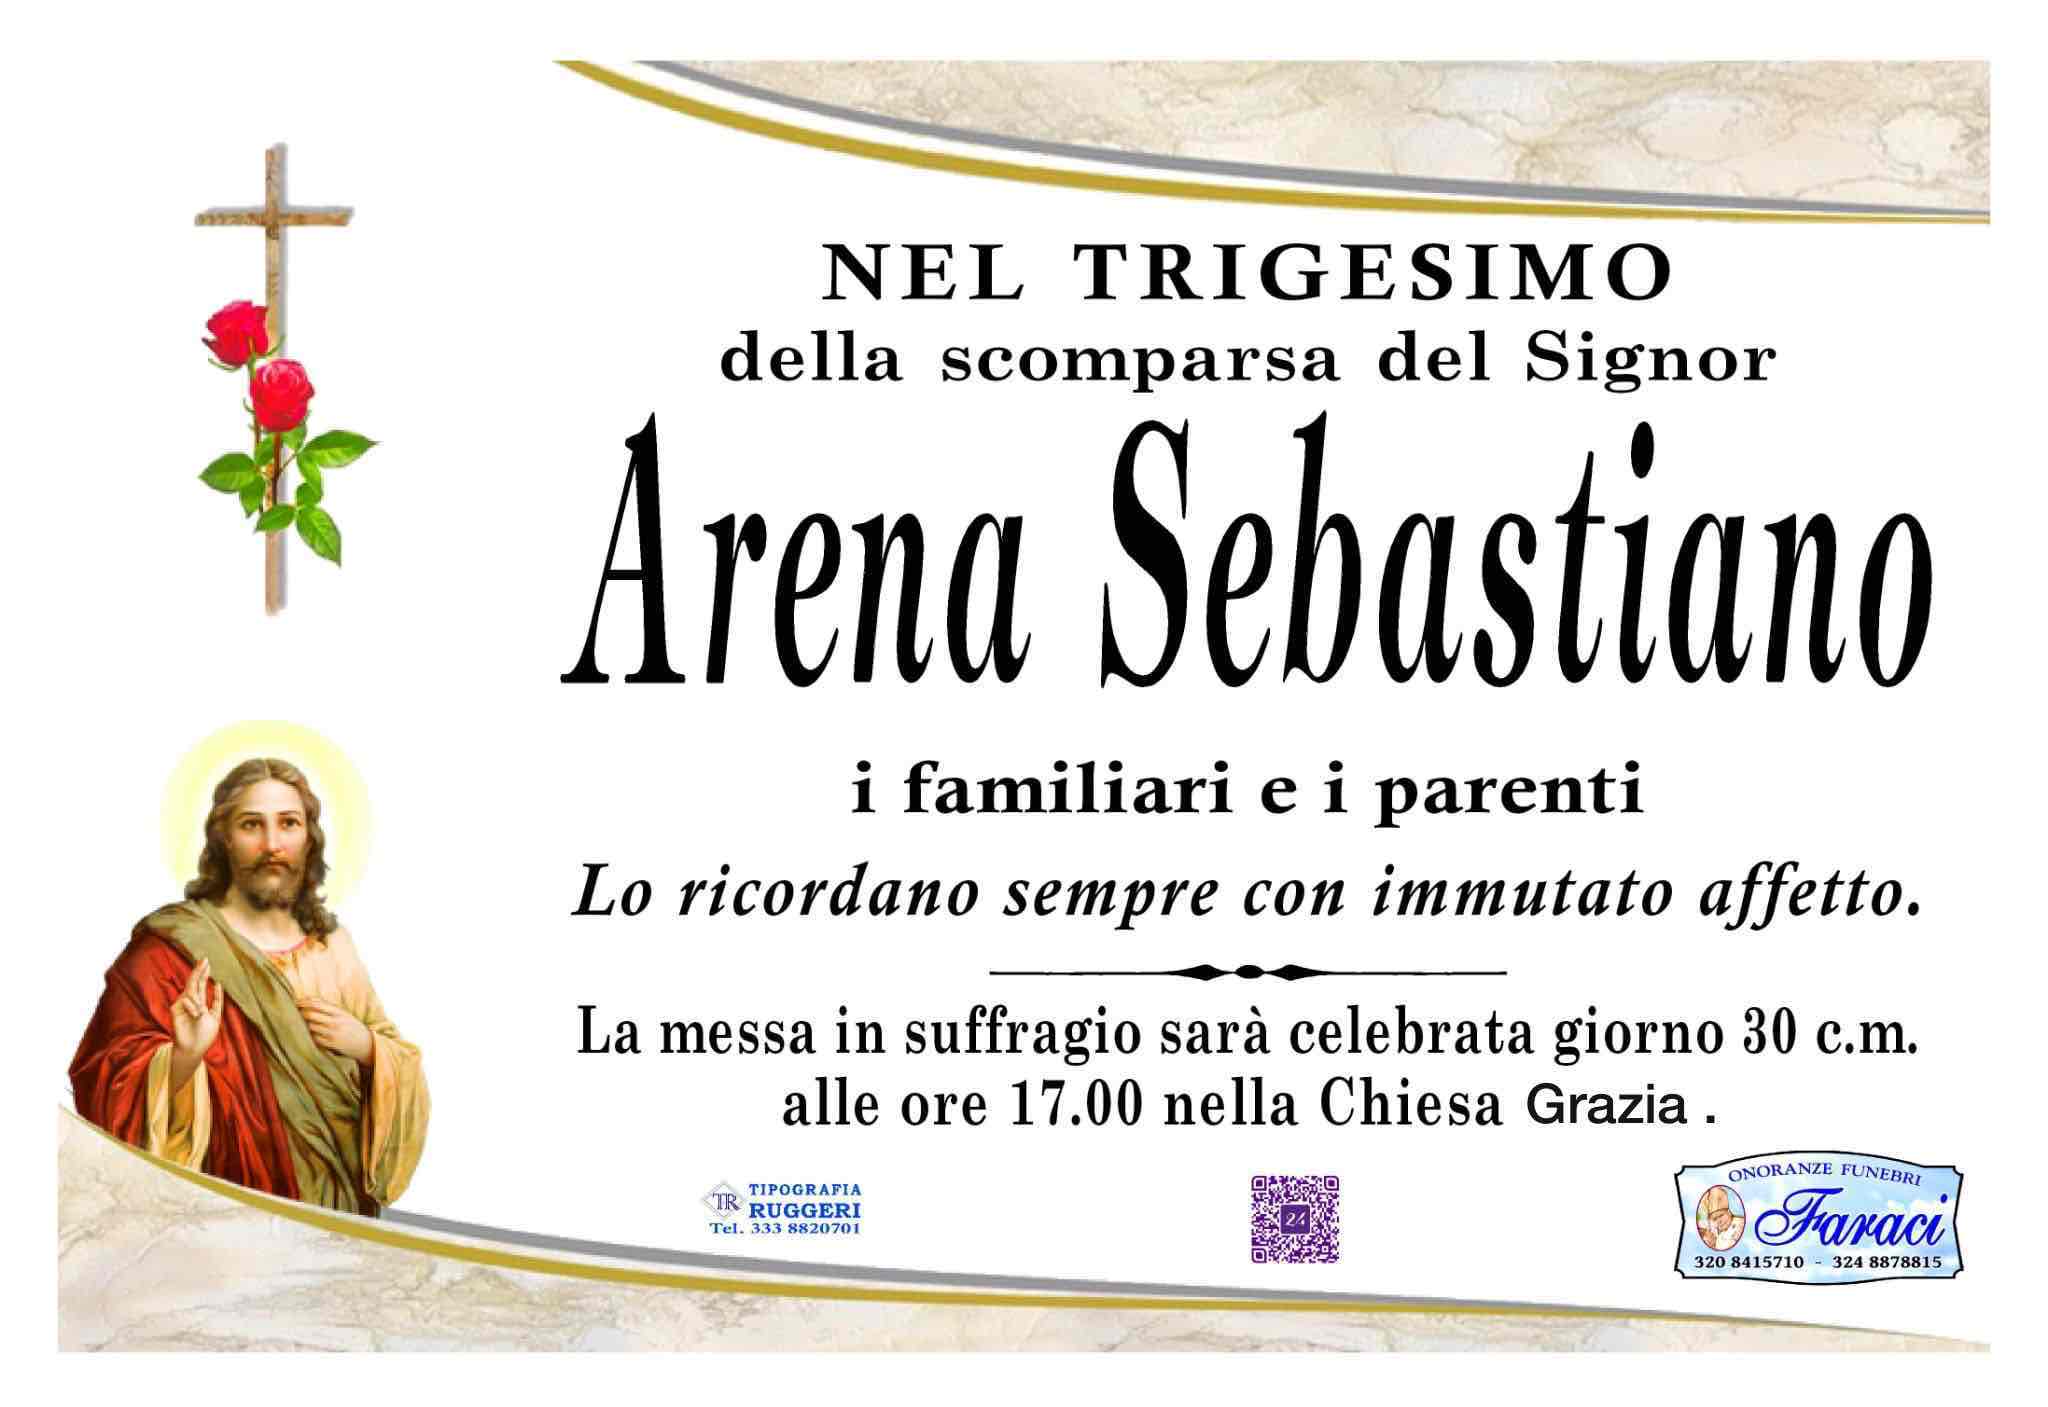 Sebastiano Arena